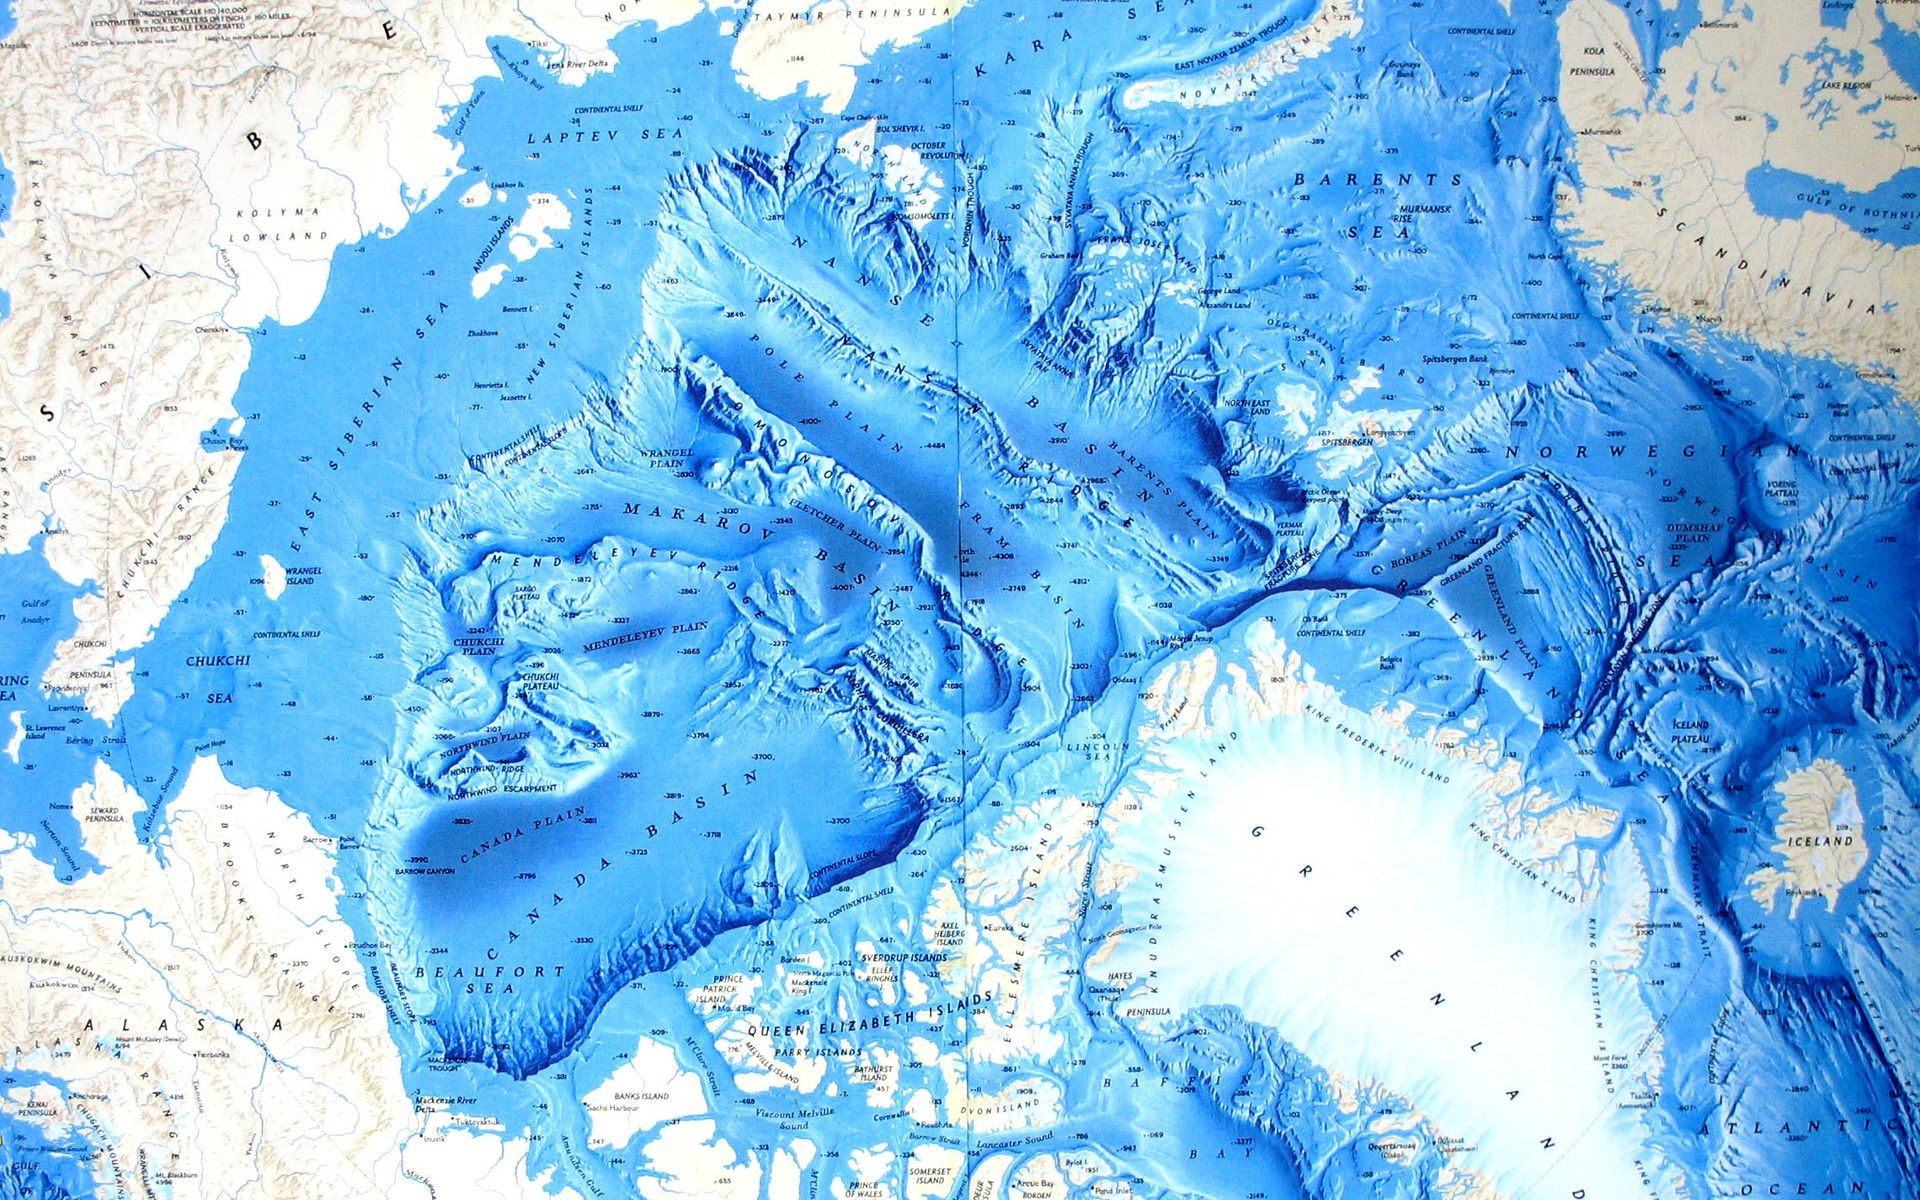 Topography of the Arctic Ocean